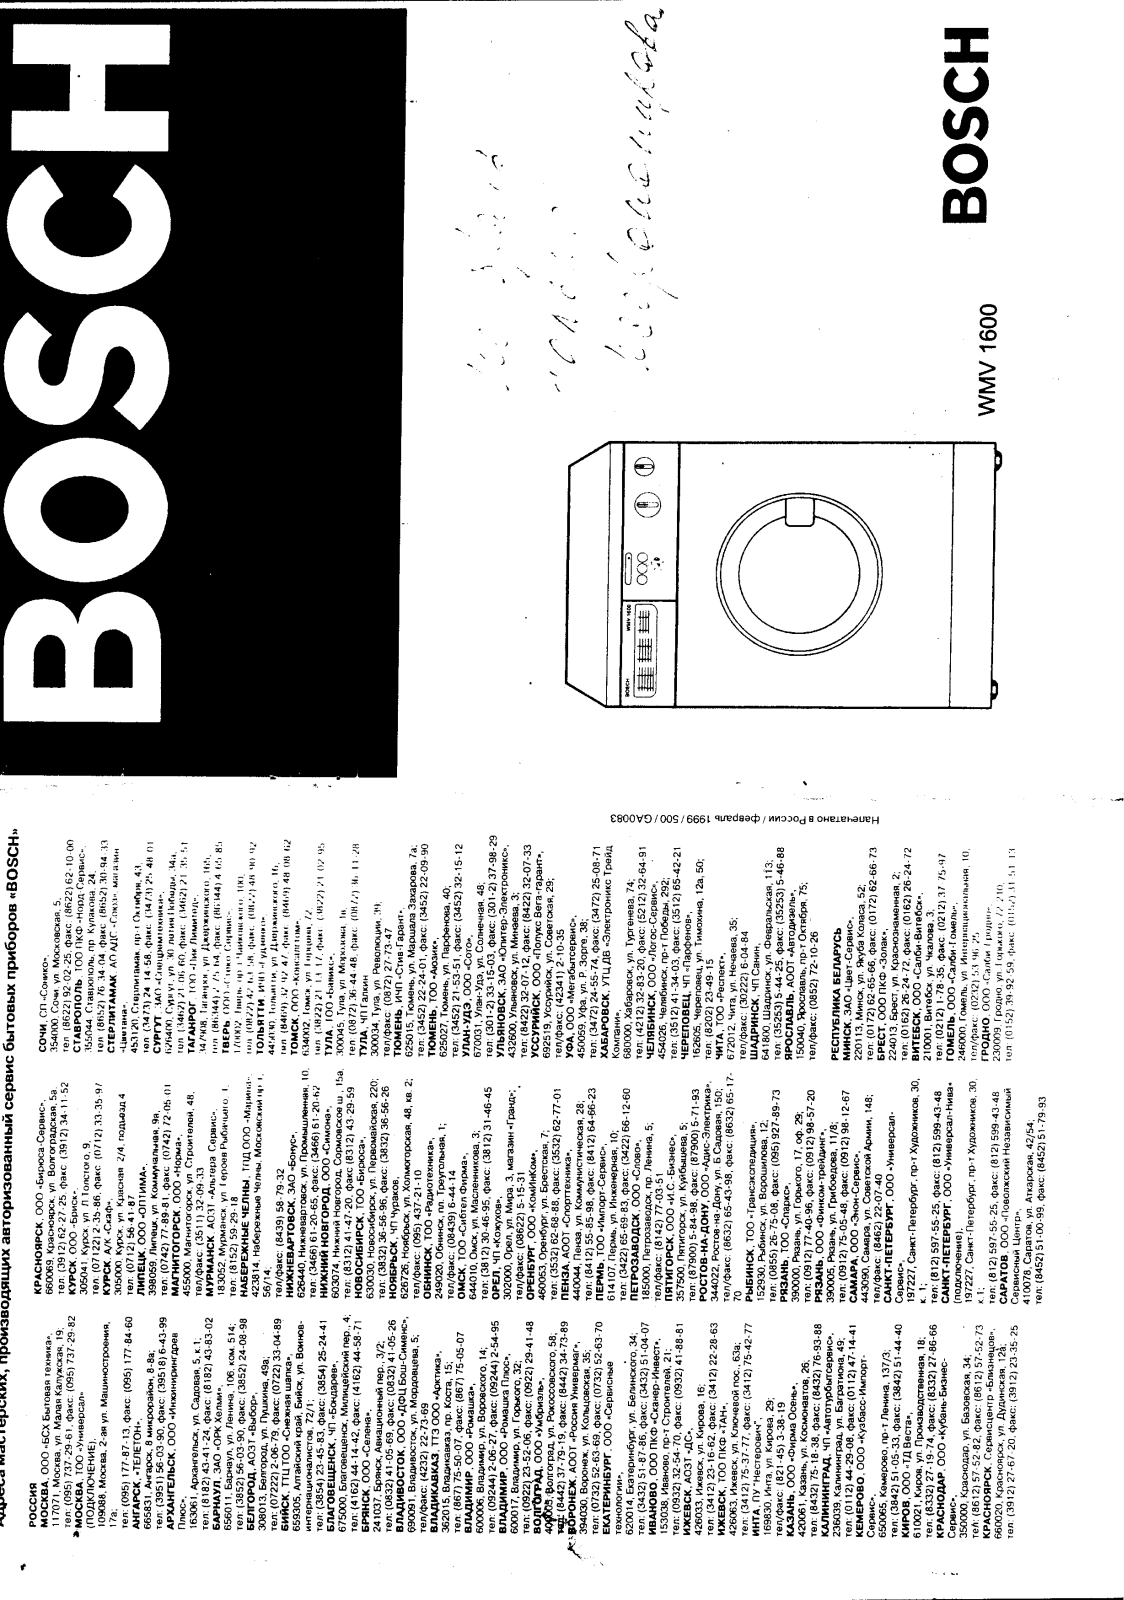 BOSCH WMV 1600 User Manual